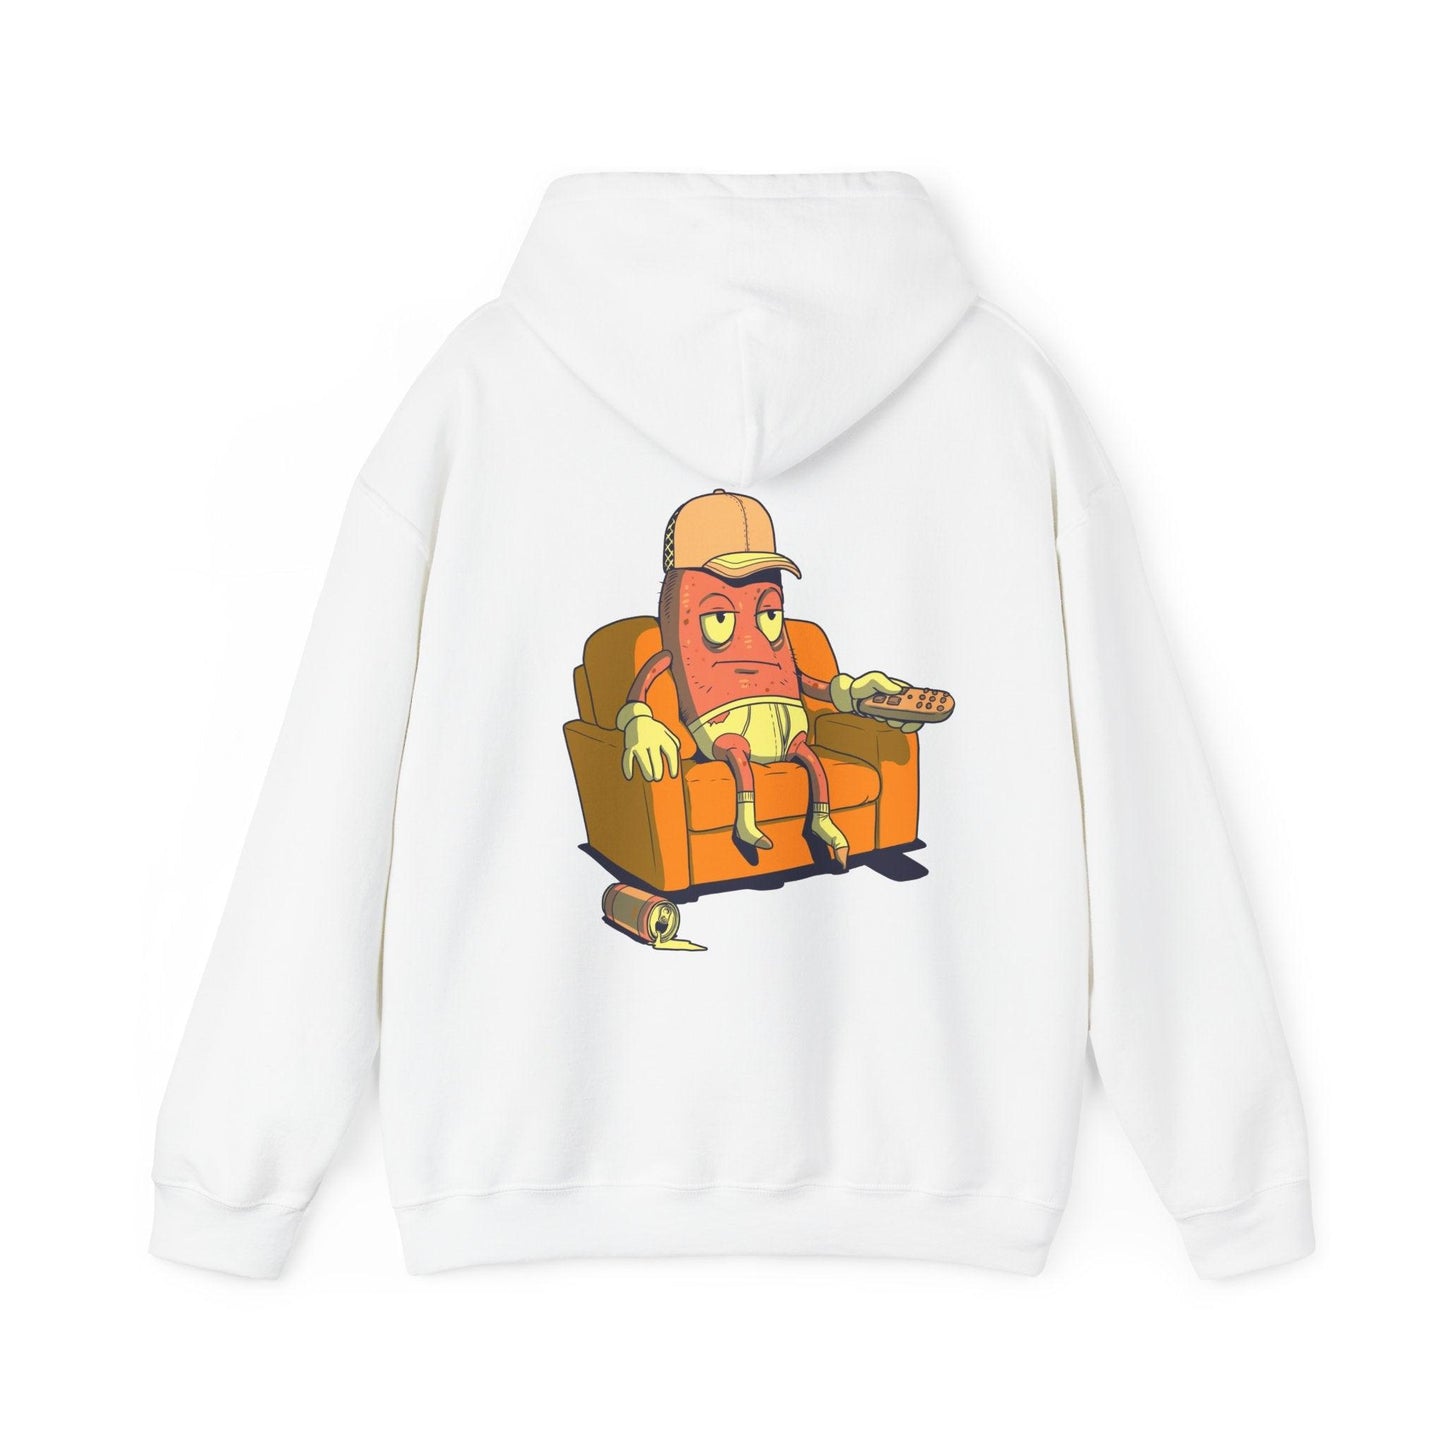 Couch Potato - Unisex Heavy Blend Hooded Sweatshirt - Shaneinvasion